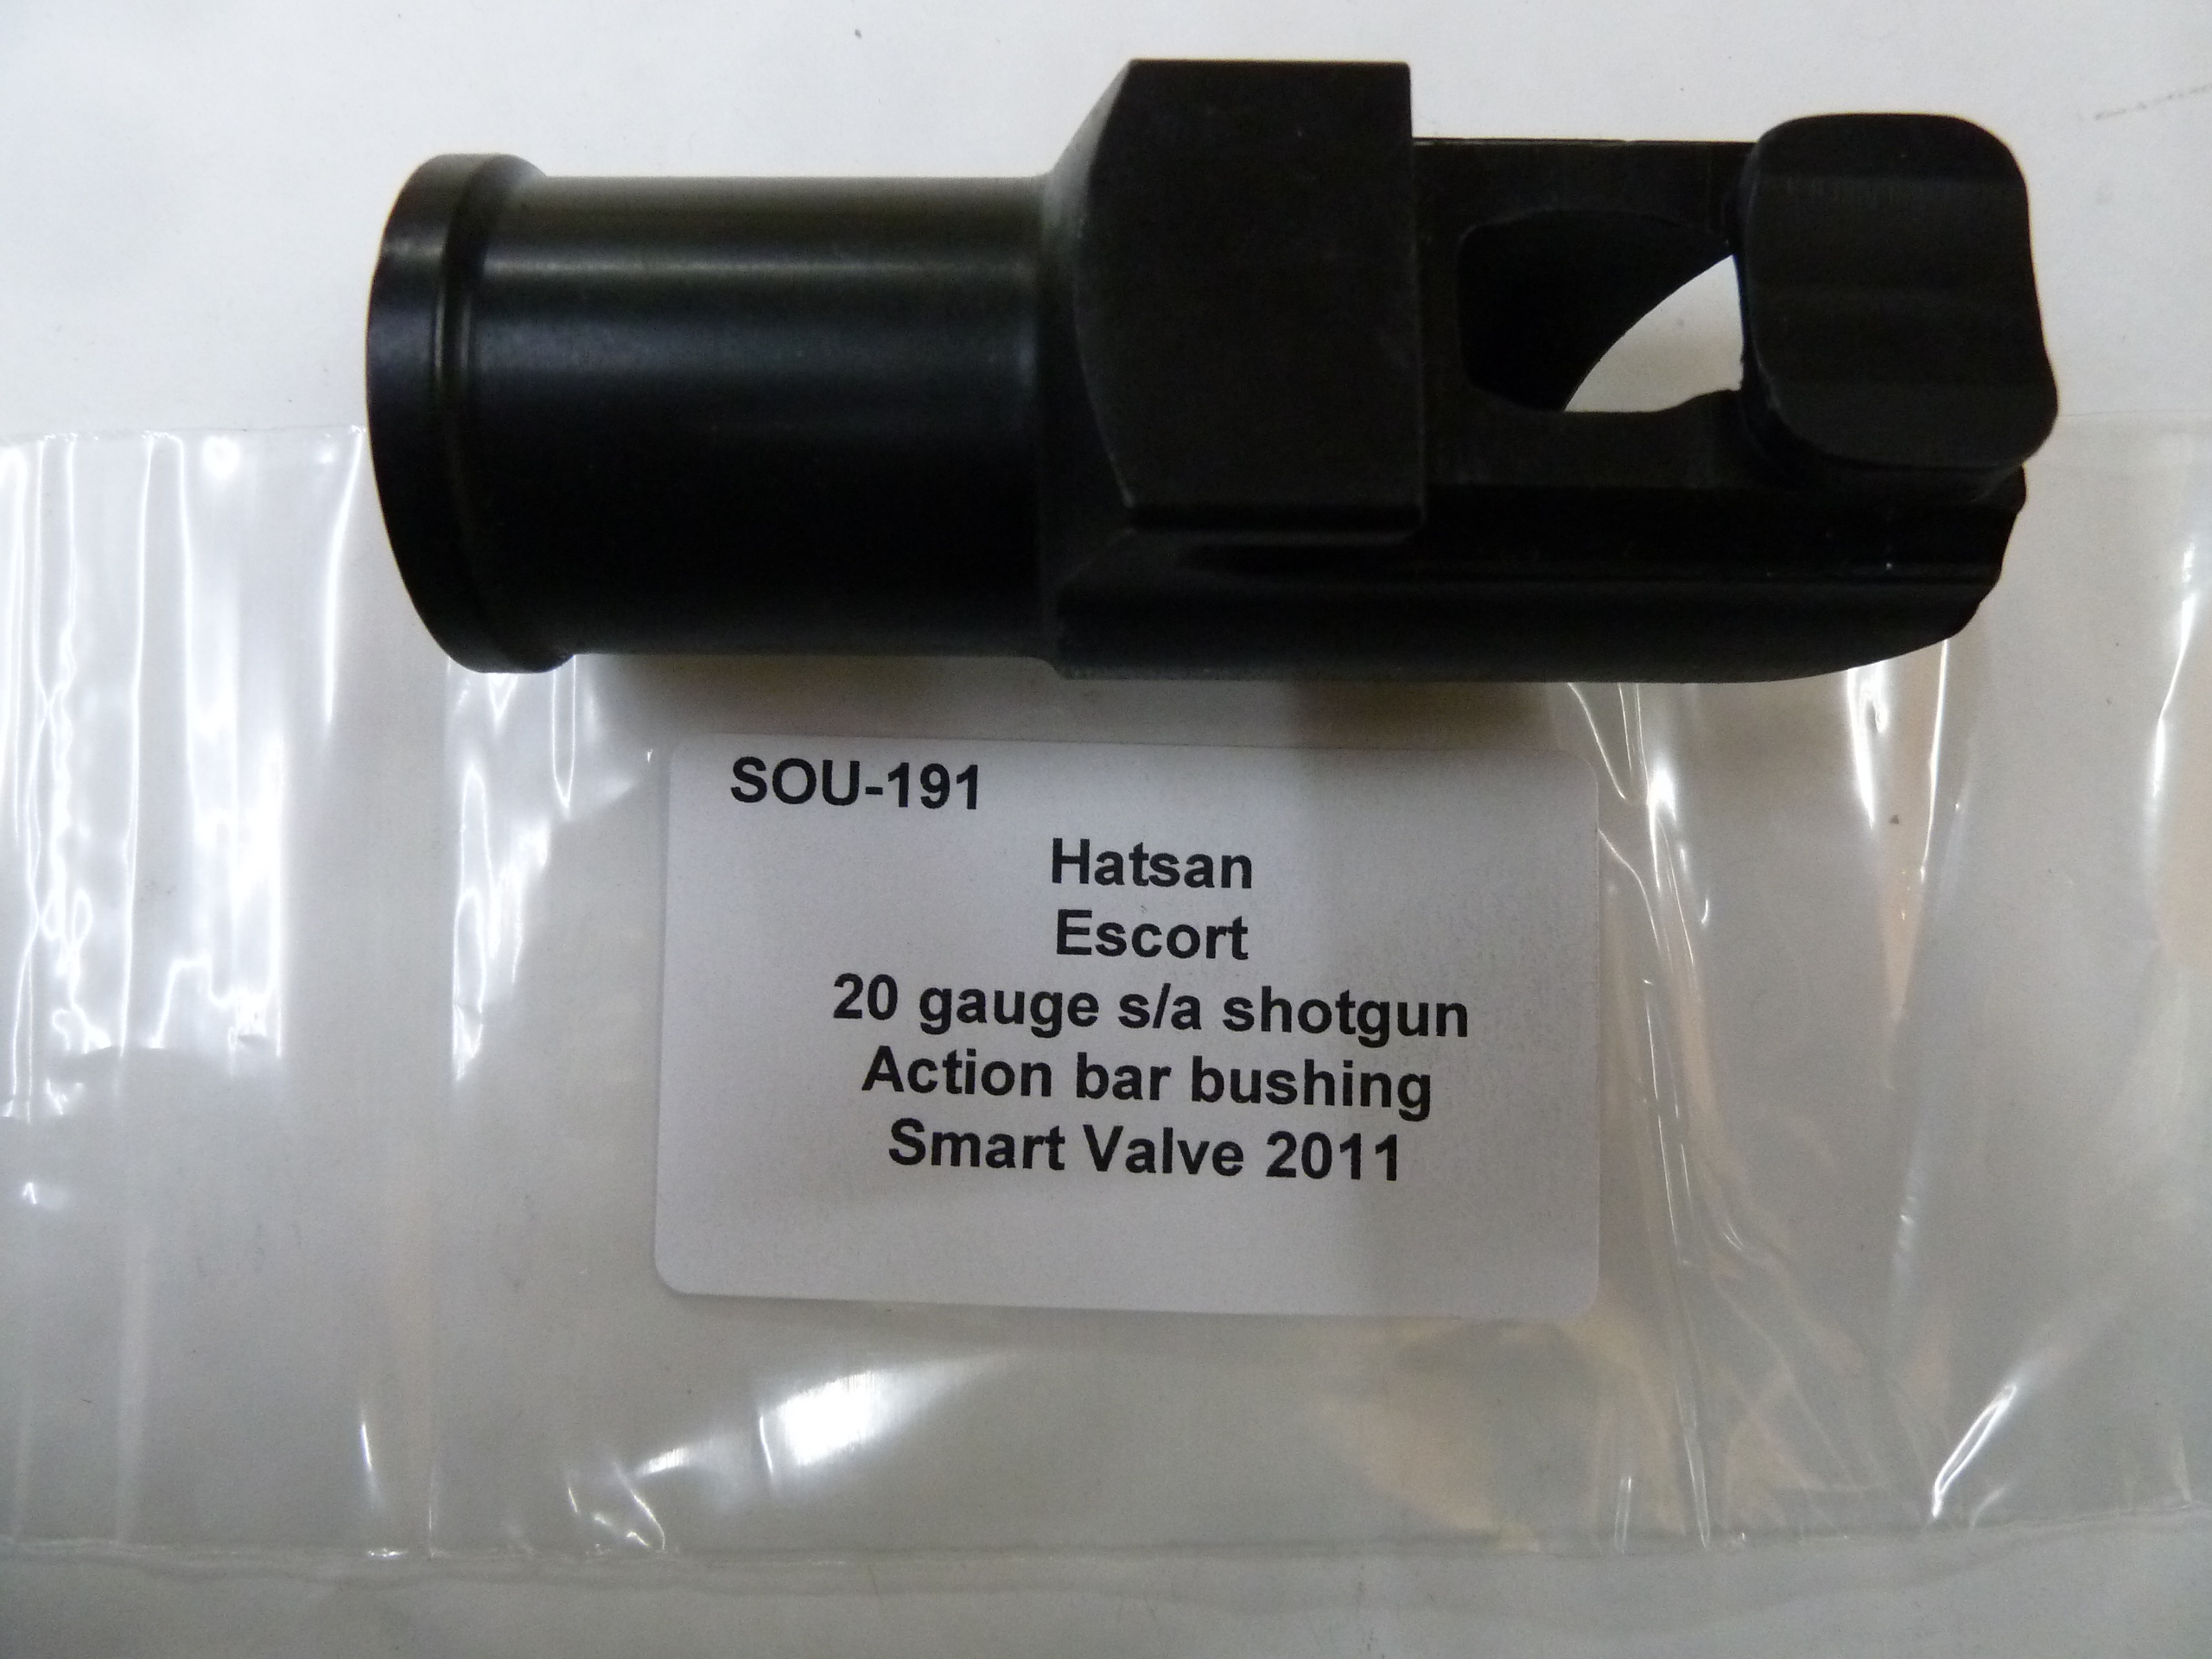 SOU-191 Hatsan Escort 20 gauge action bar bushing smart valve 2011 (2)